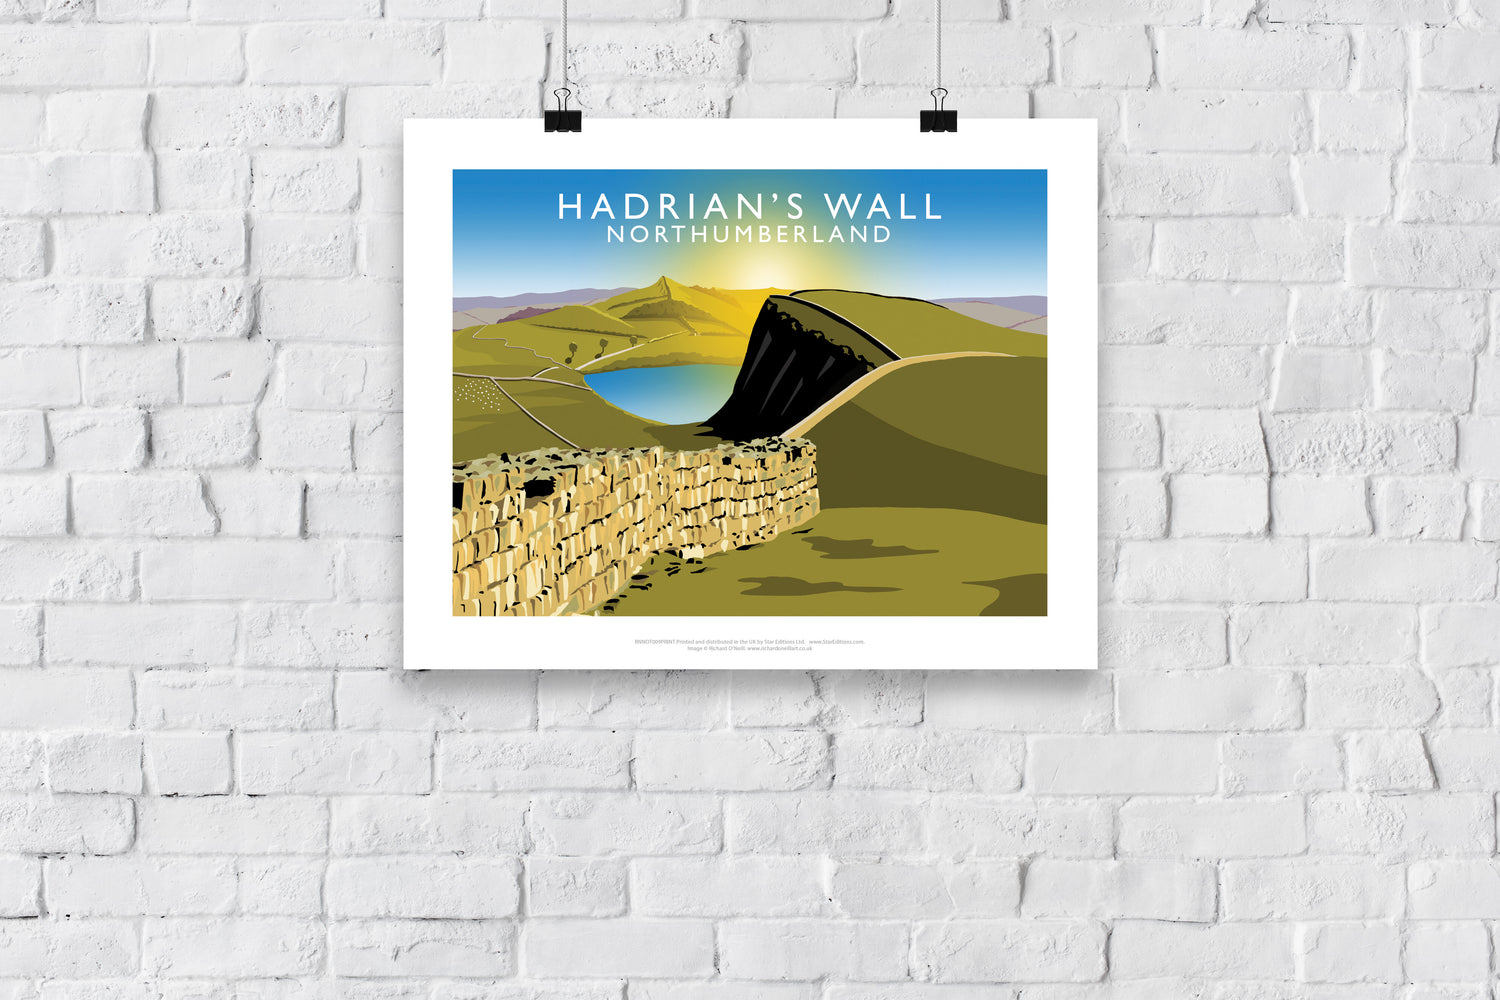 Hadrian's Wall, Northumberland - Art Print